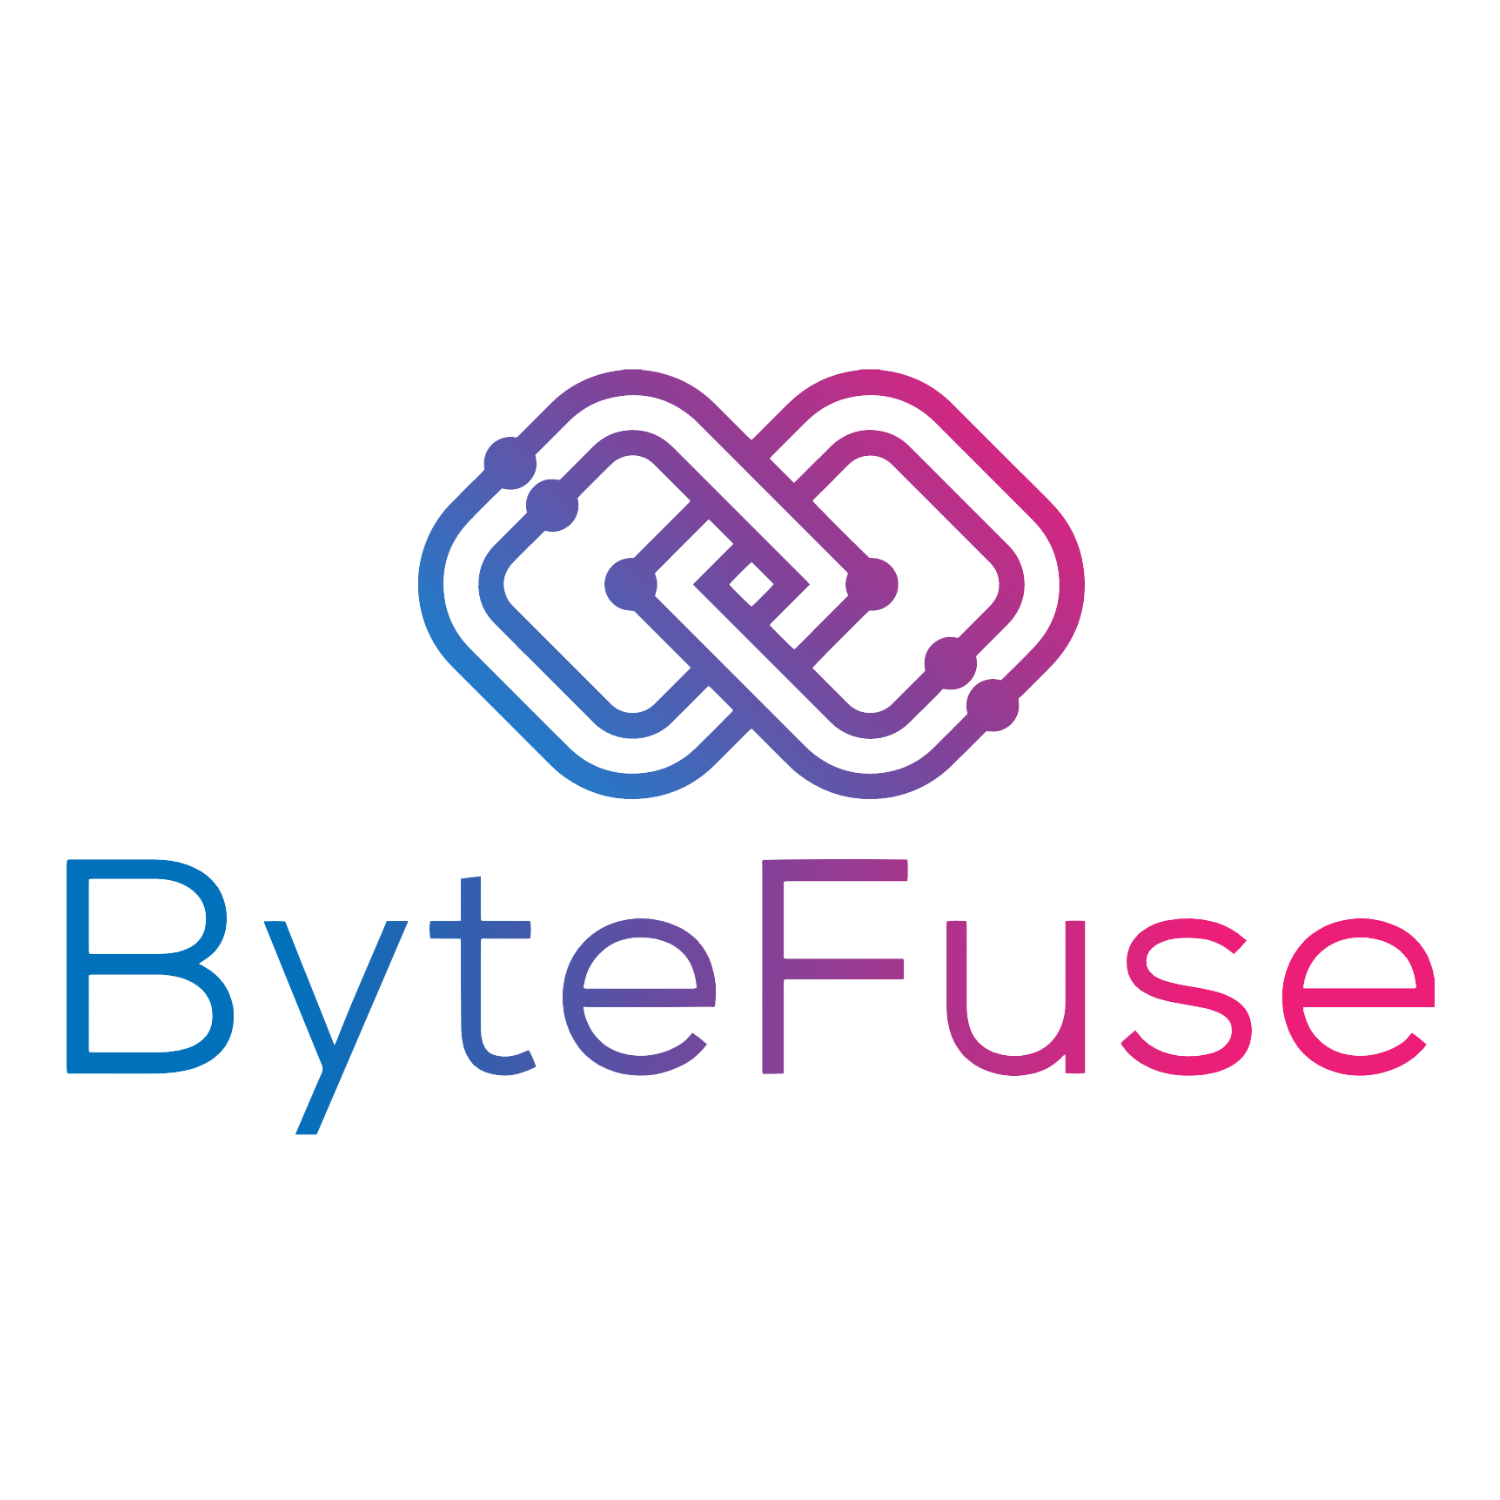 ByteFuse